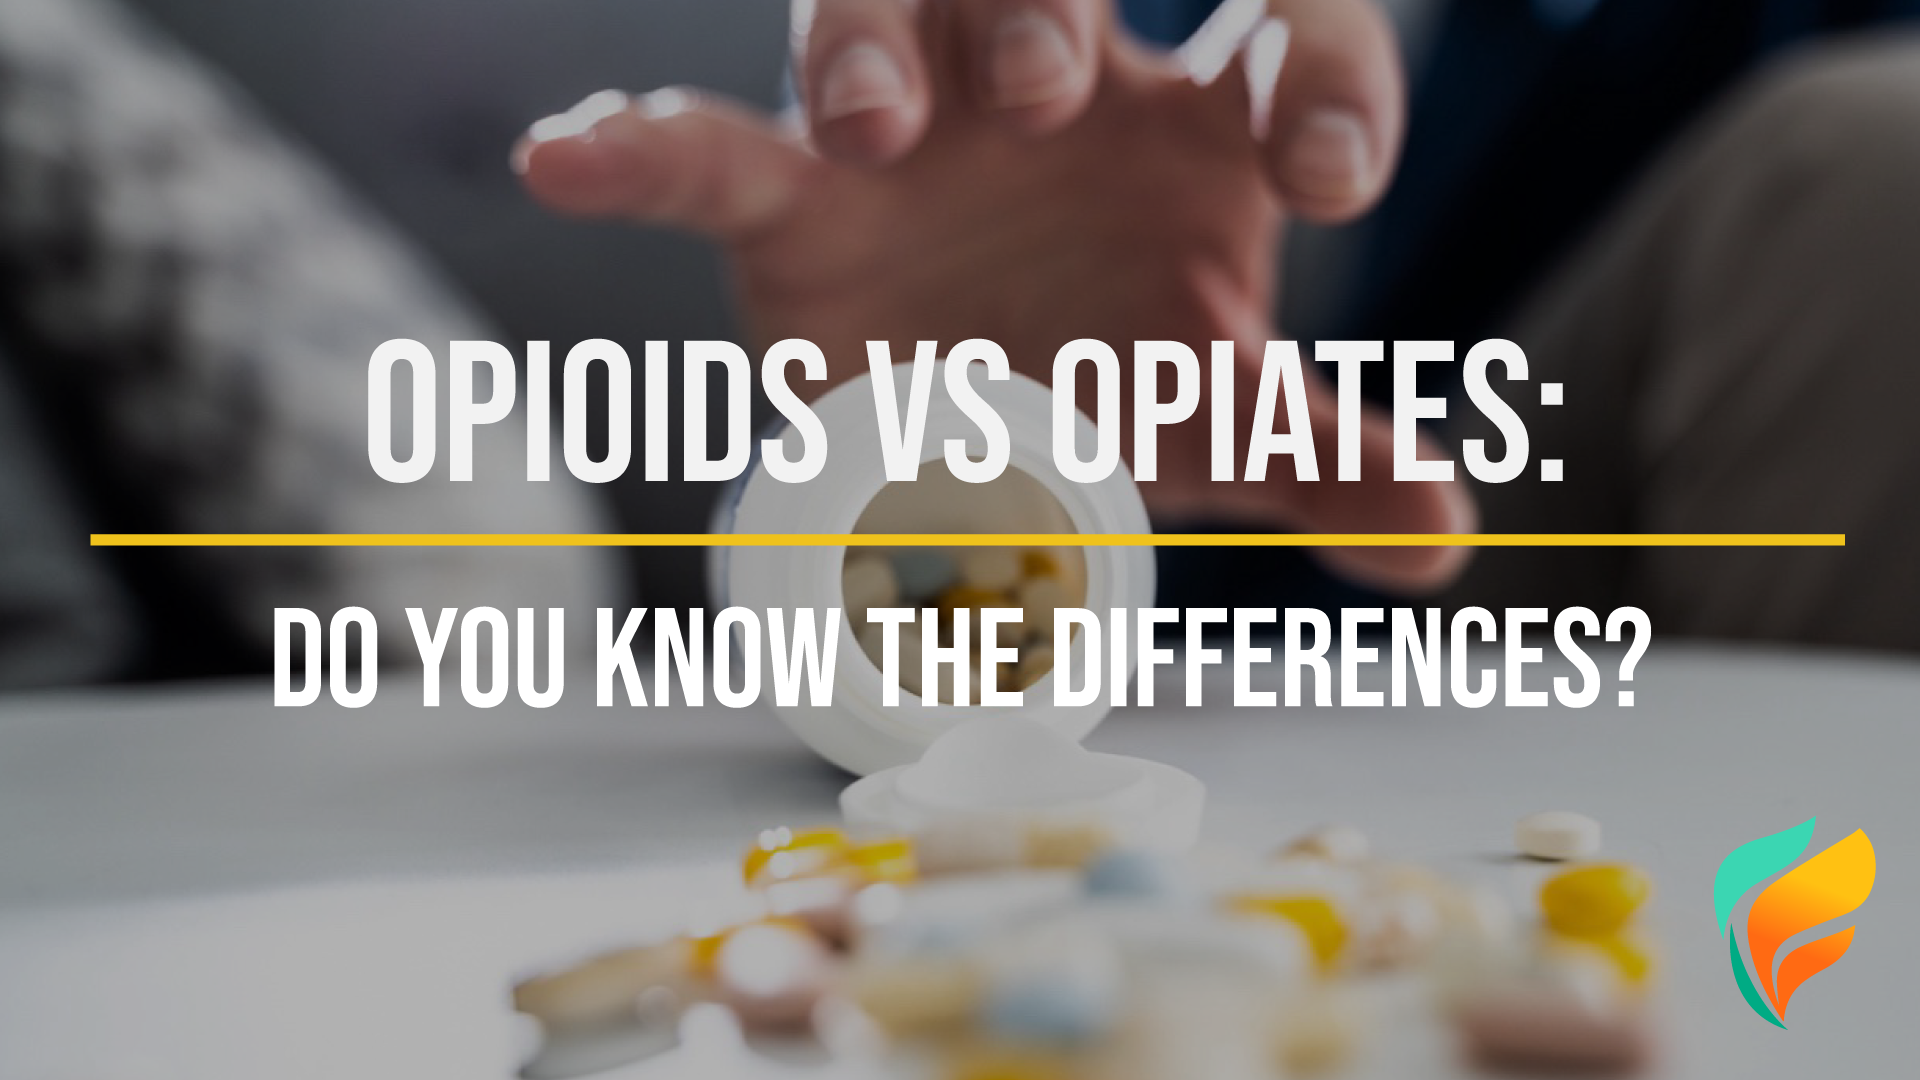 Opioids vs opiates: The Differences